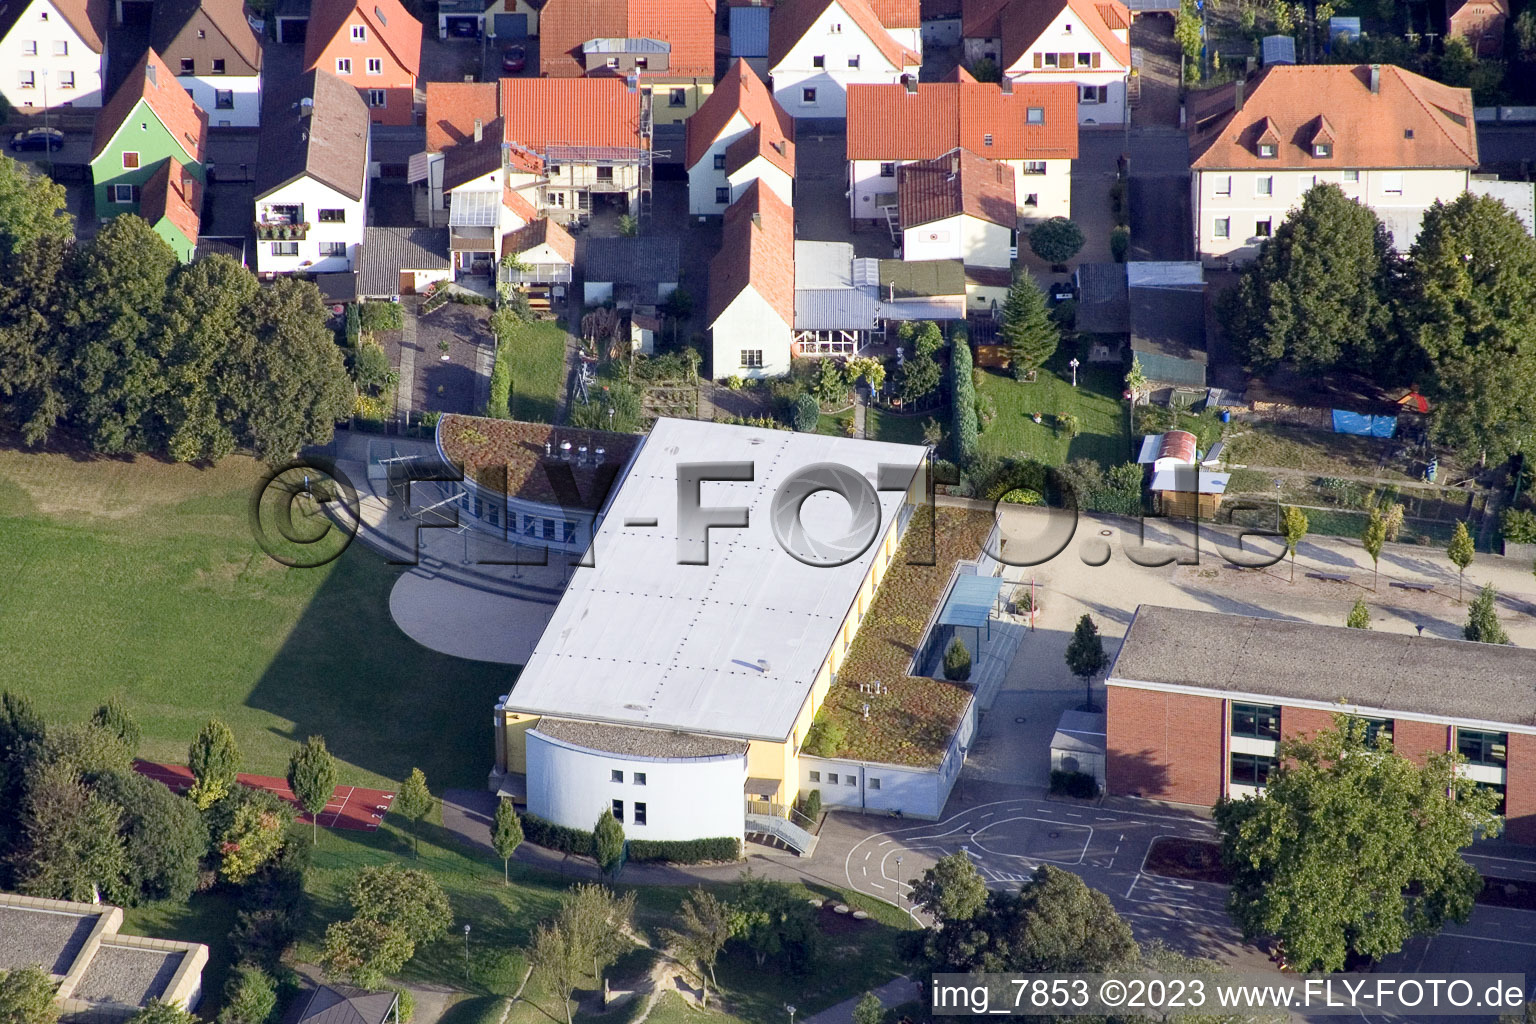 Drone image of District Maximiliansau in Wörth am Rhein in the state Rhineland-Palatinate, Germany